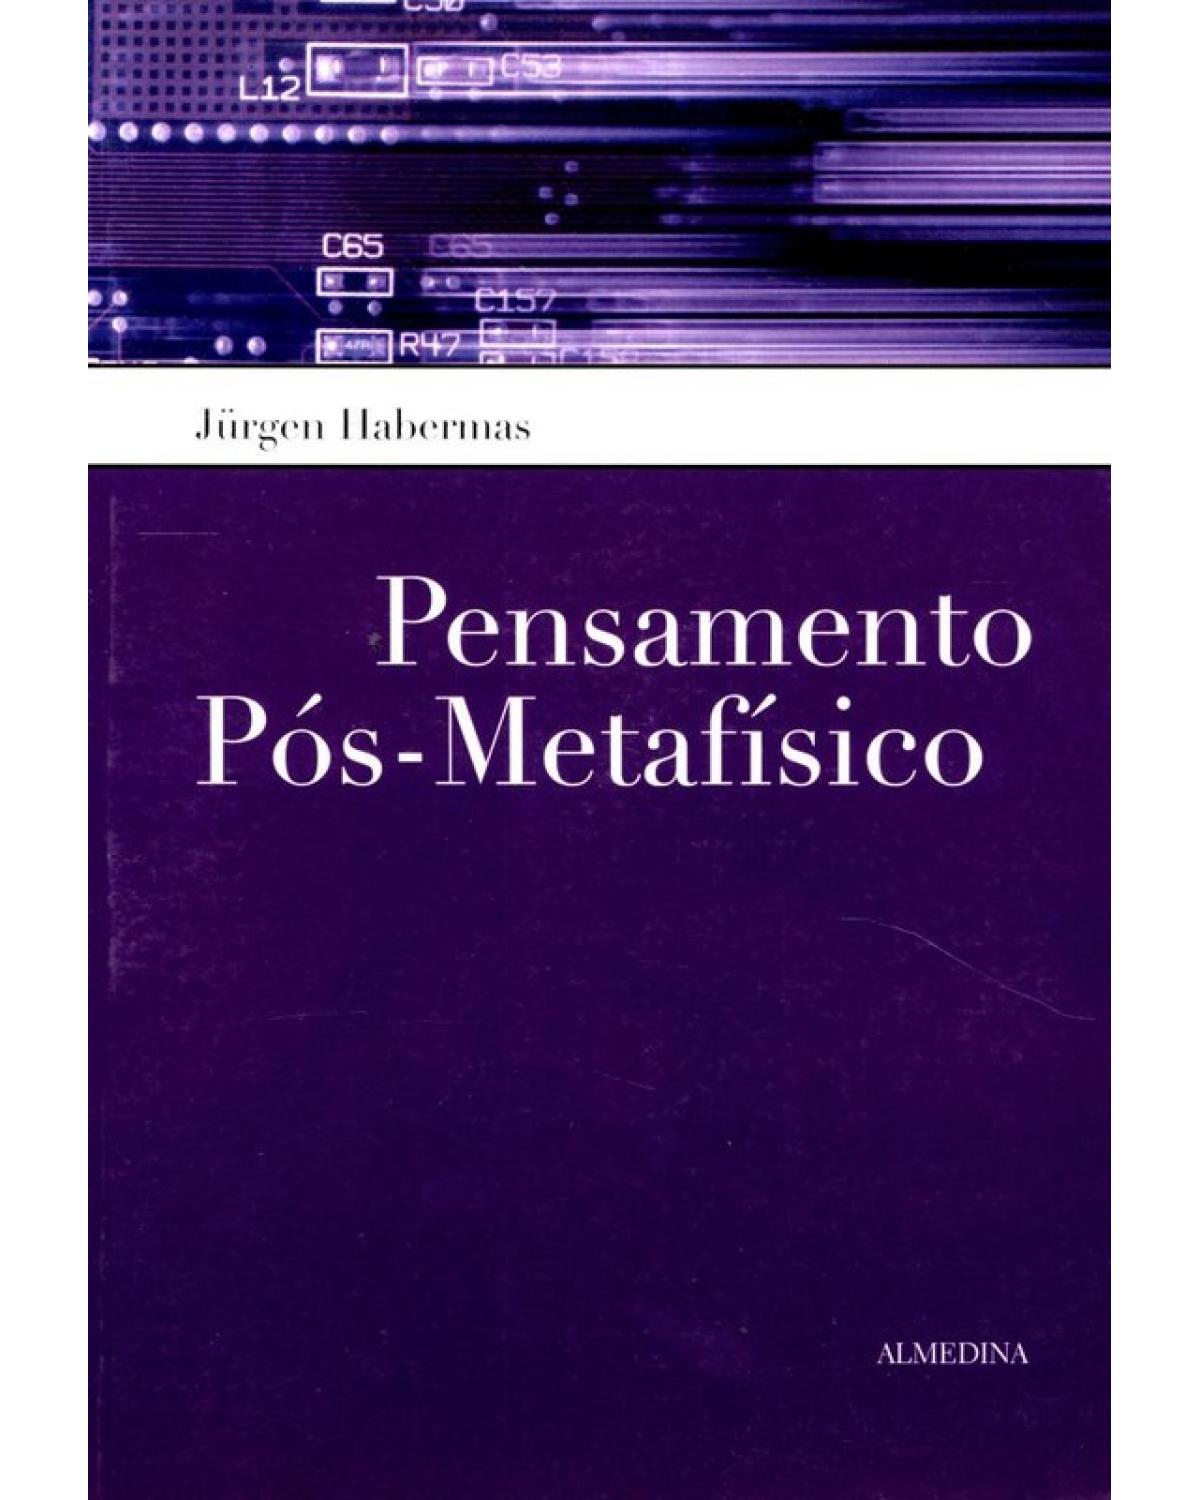 Pensamento pós-metafísico - 1ª Edição | 2004